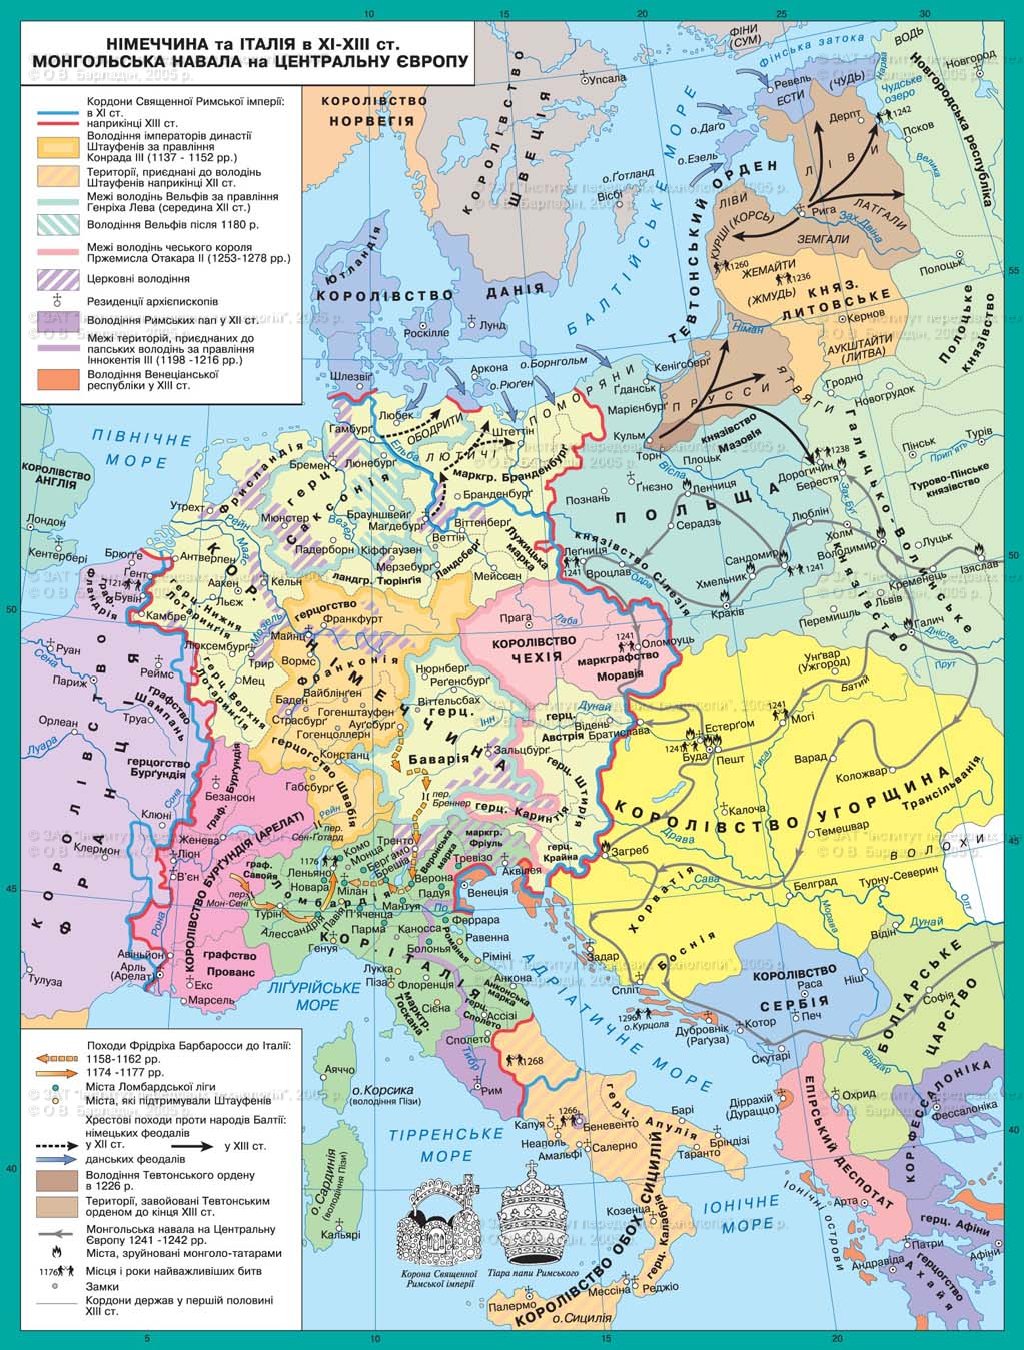 12 13 века европа. Карта Европы XII века. Карта Европы 13 века. Карта Европы 12-13 веков. Карта Европы XIII века.